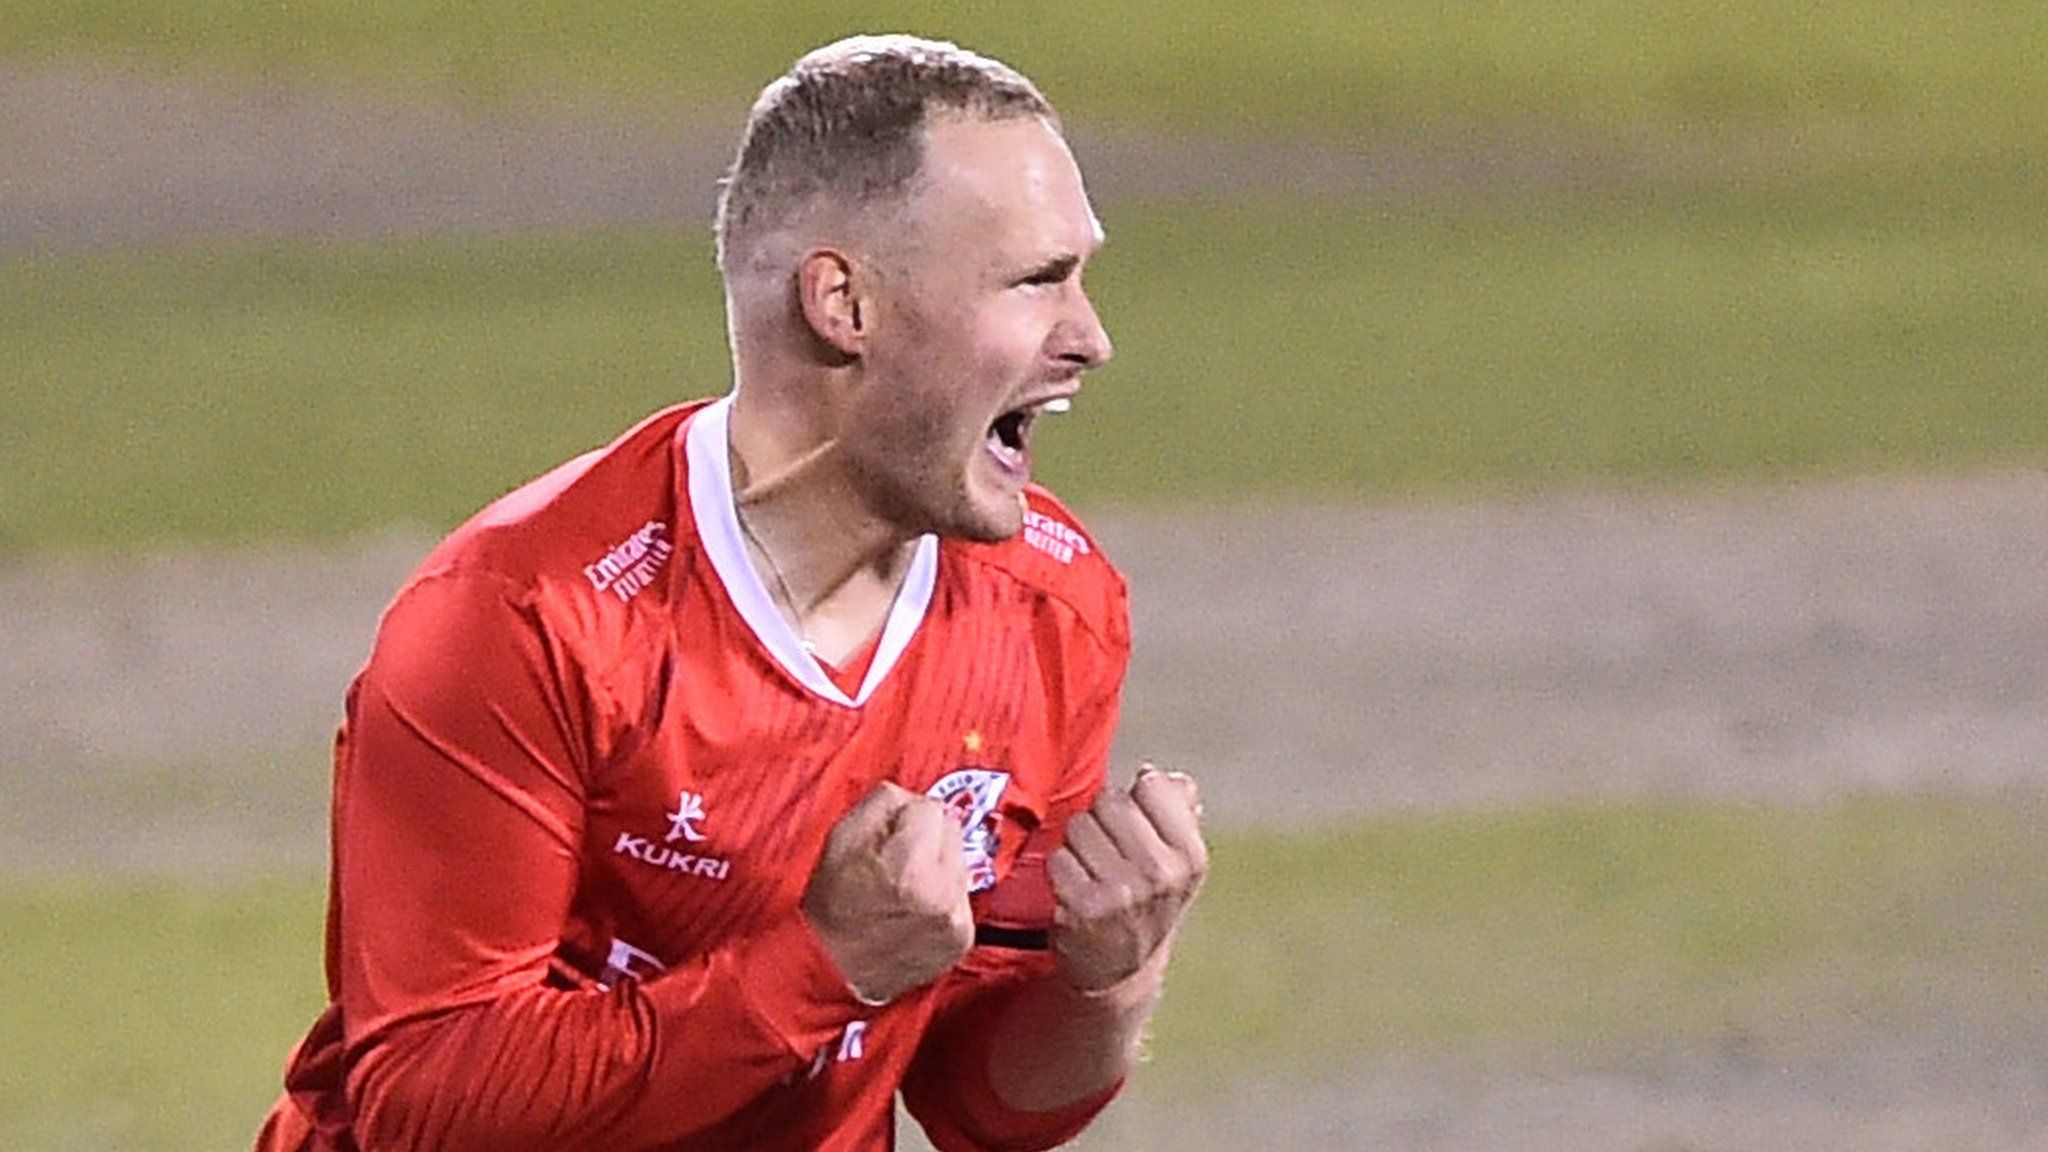 Matthew Parkinson celebrates a wicket for Lancashire